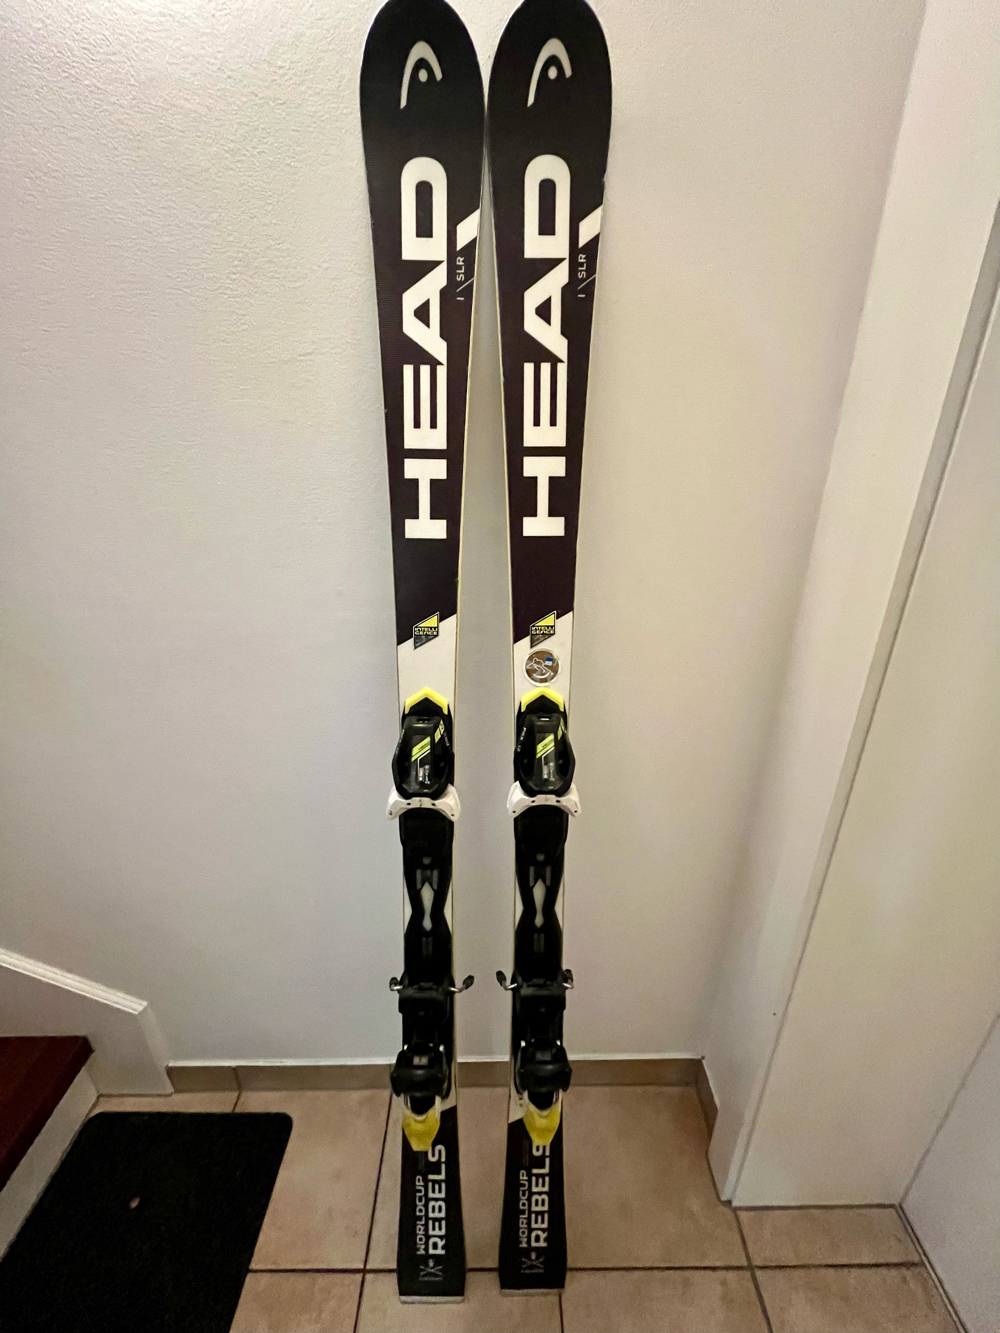 Head Ski I.SLR 160cm Herrenski, Damenski